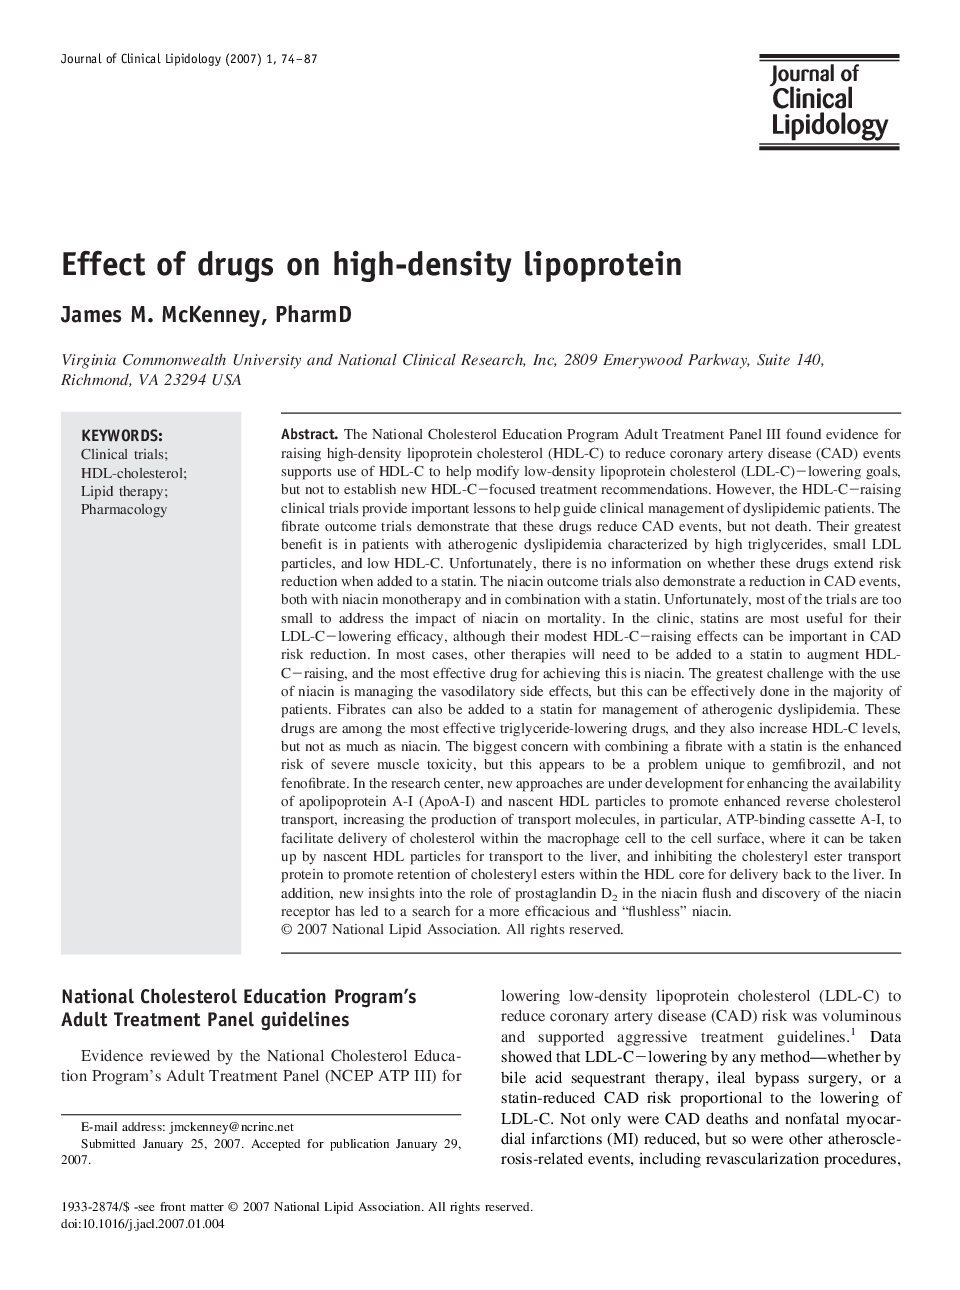 Effect of drugs on high-density lipoprotein